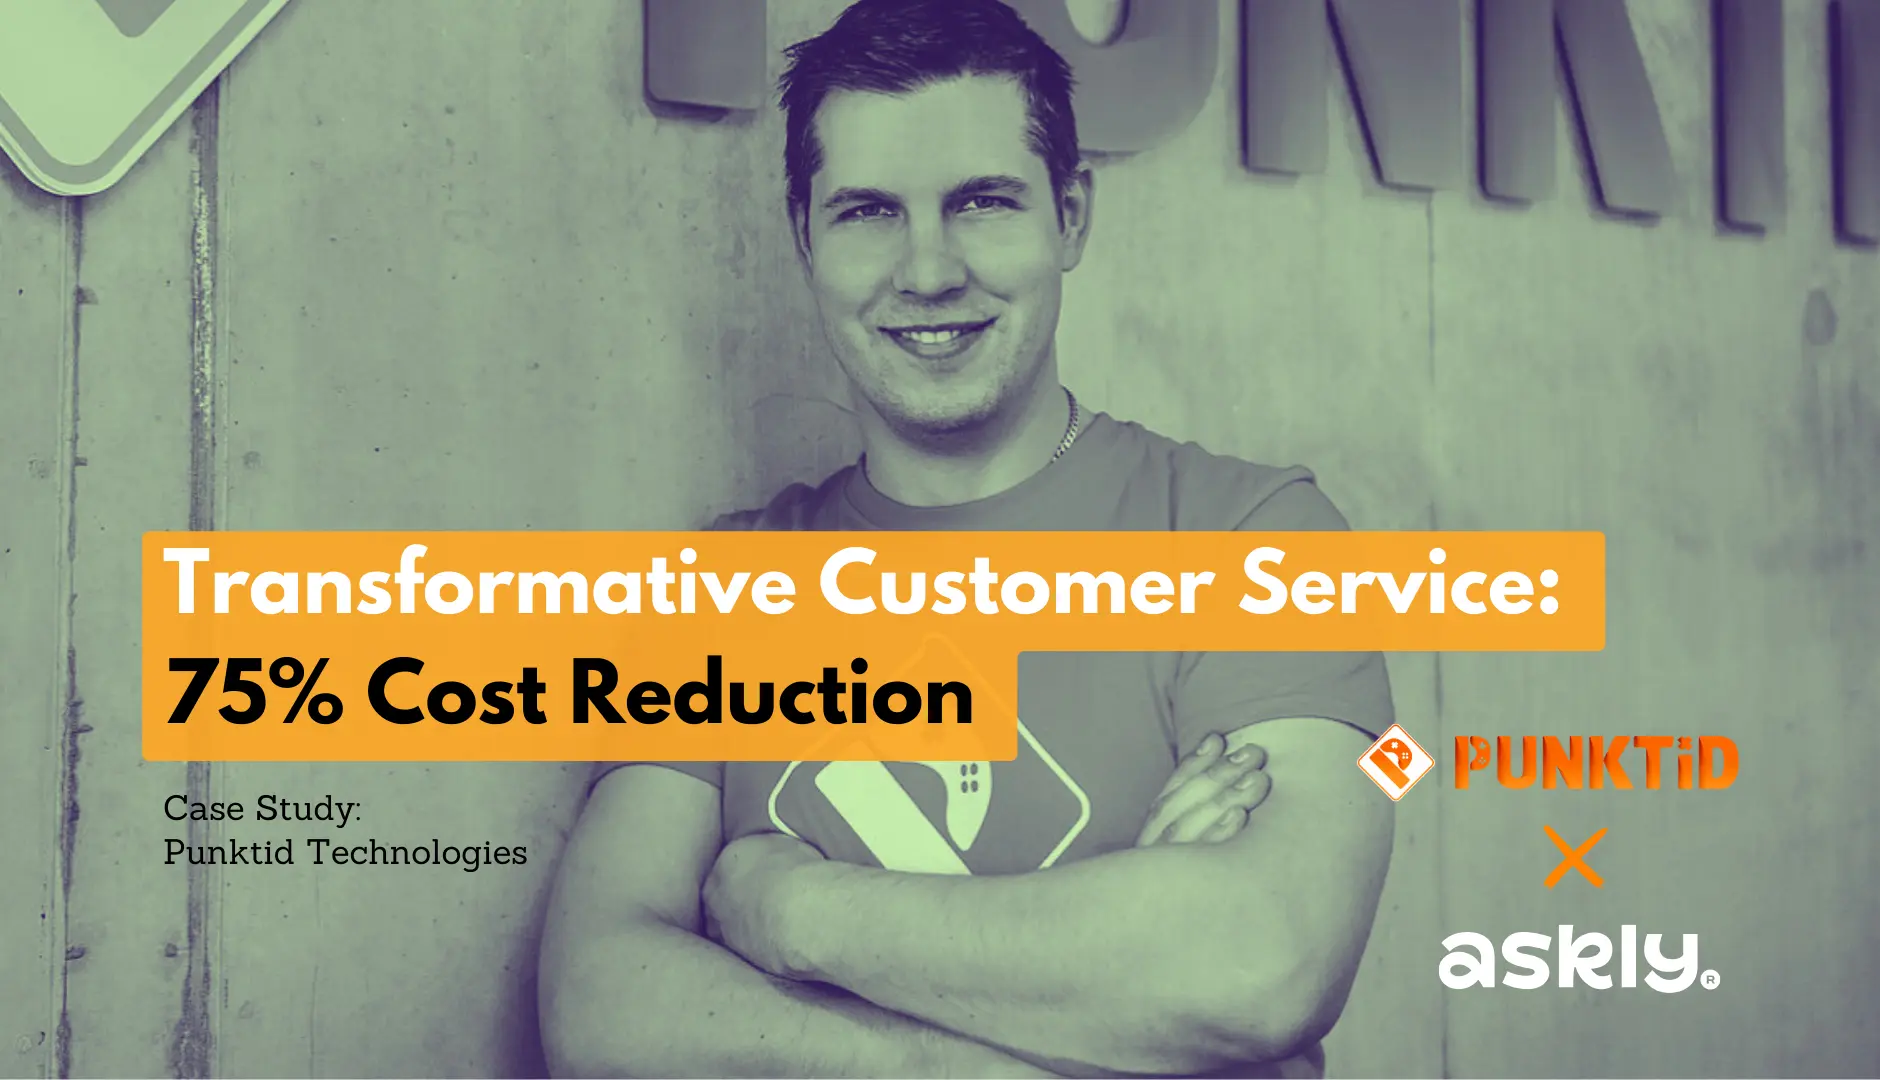 Transformative Customer Service: Punktid Technologies' 75% Cost Reduction